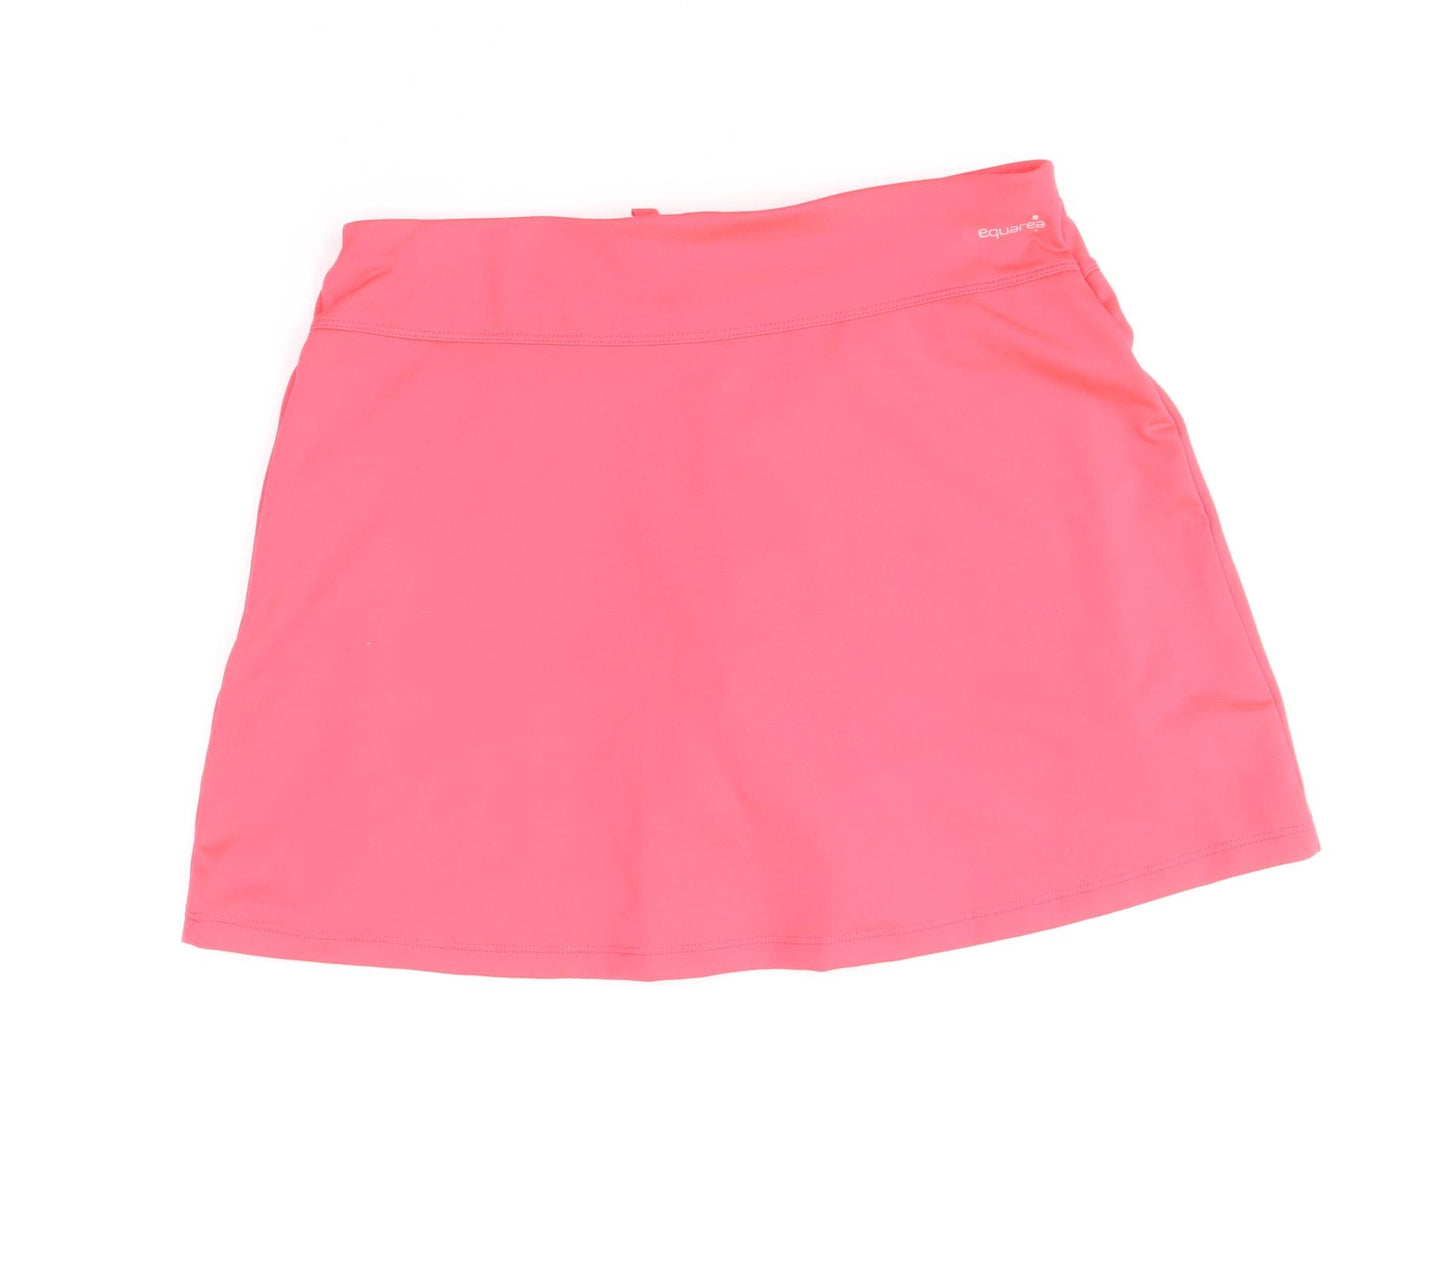 Artengo Womens Pink Polyester Hot Pants Shorts Size 6 Regular - Skort